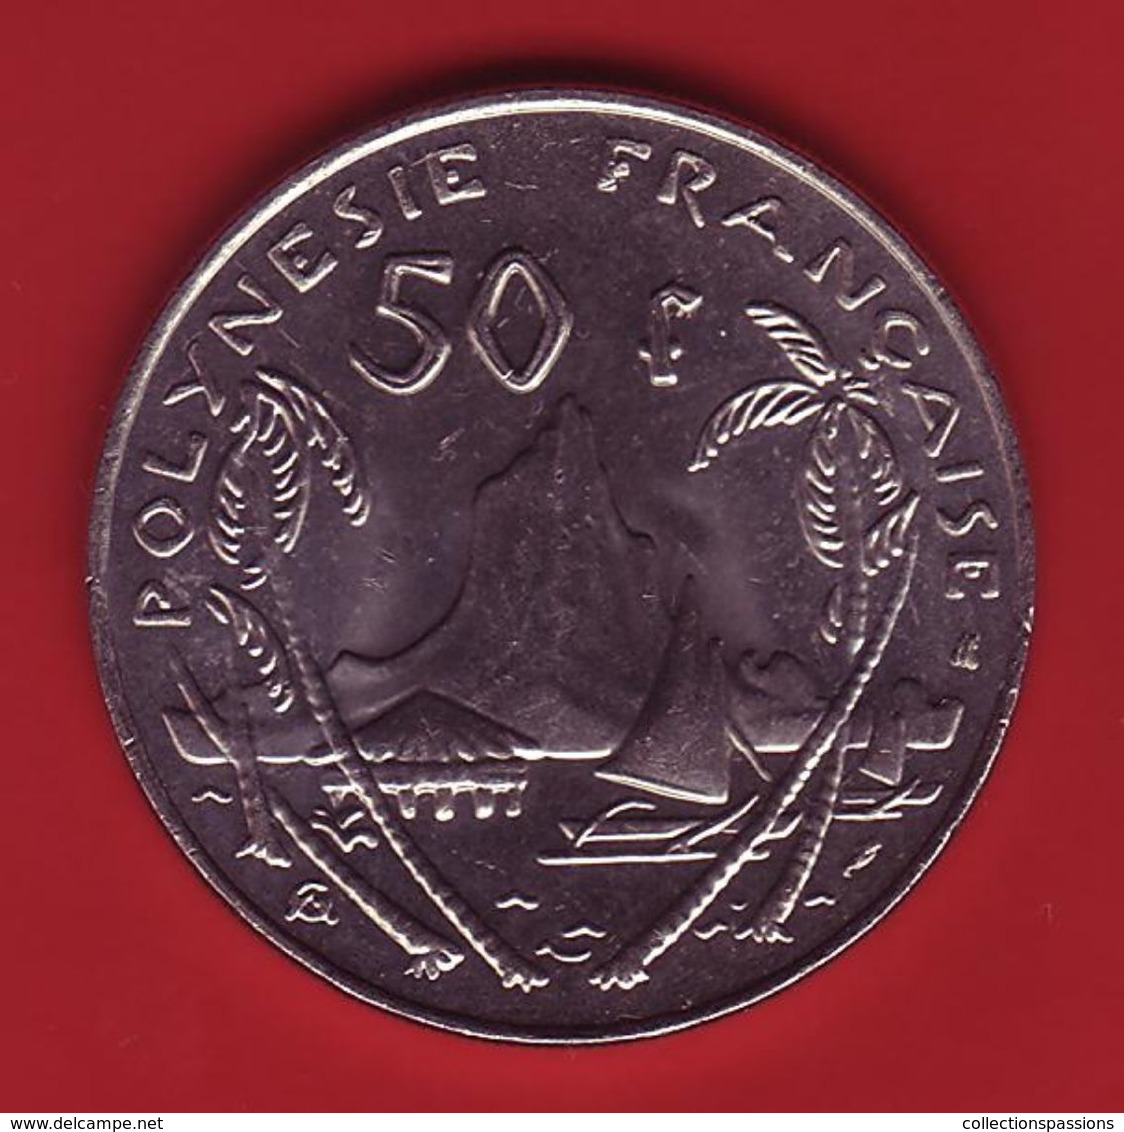 - POLYNESIE FRANCAISE - 50 Francs - 1995 - - Polynésie Française